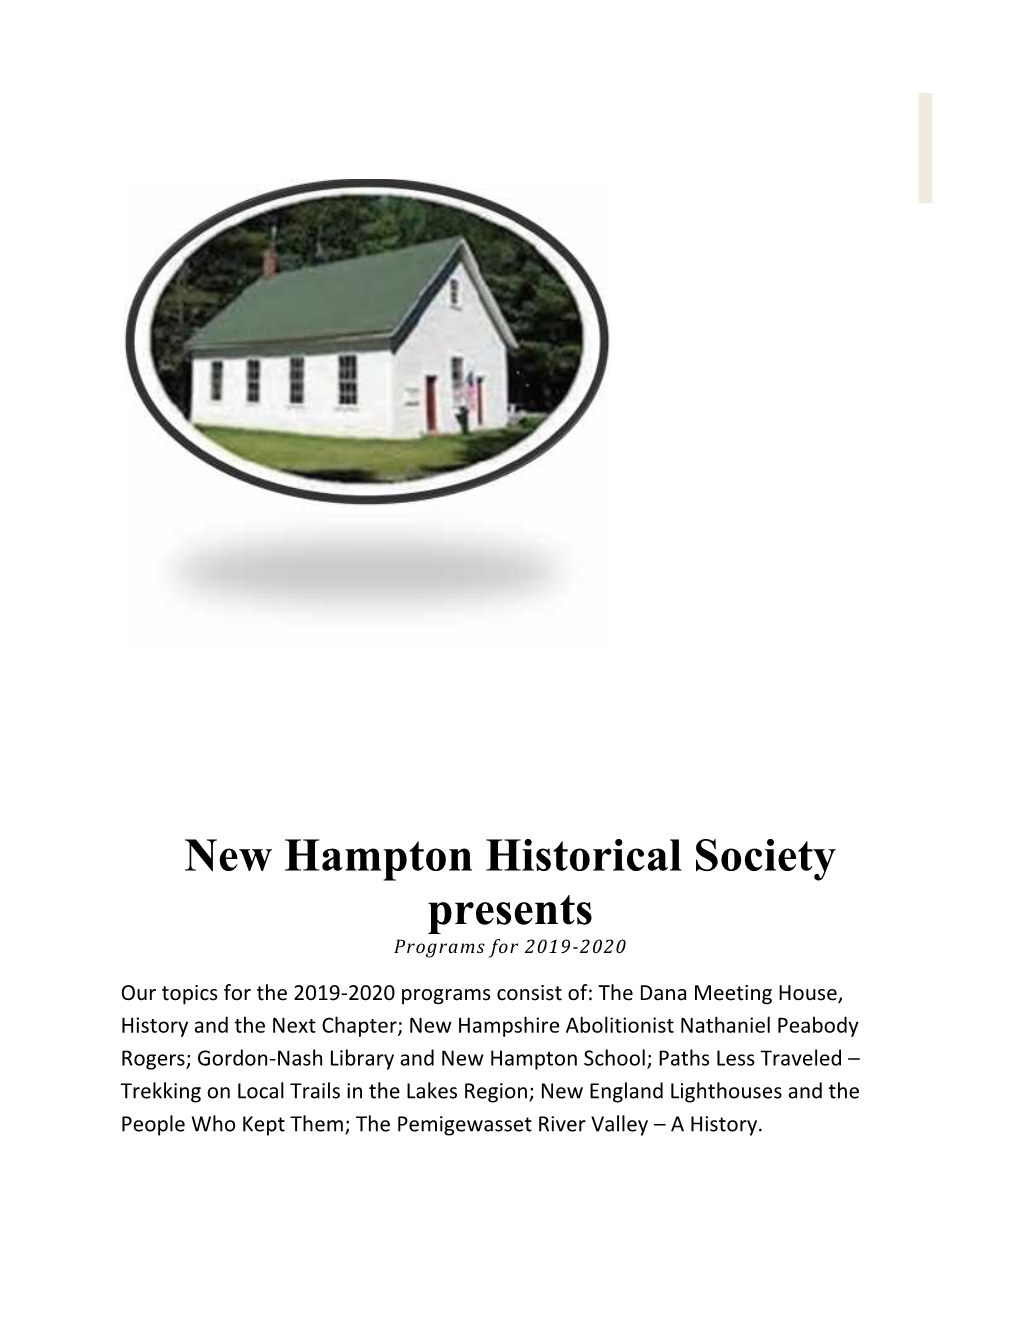 New Hampton Historical Society Presents Programs for 2019-2020